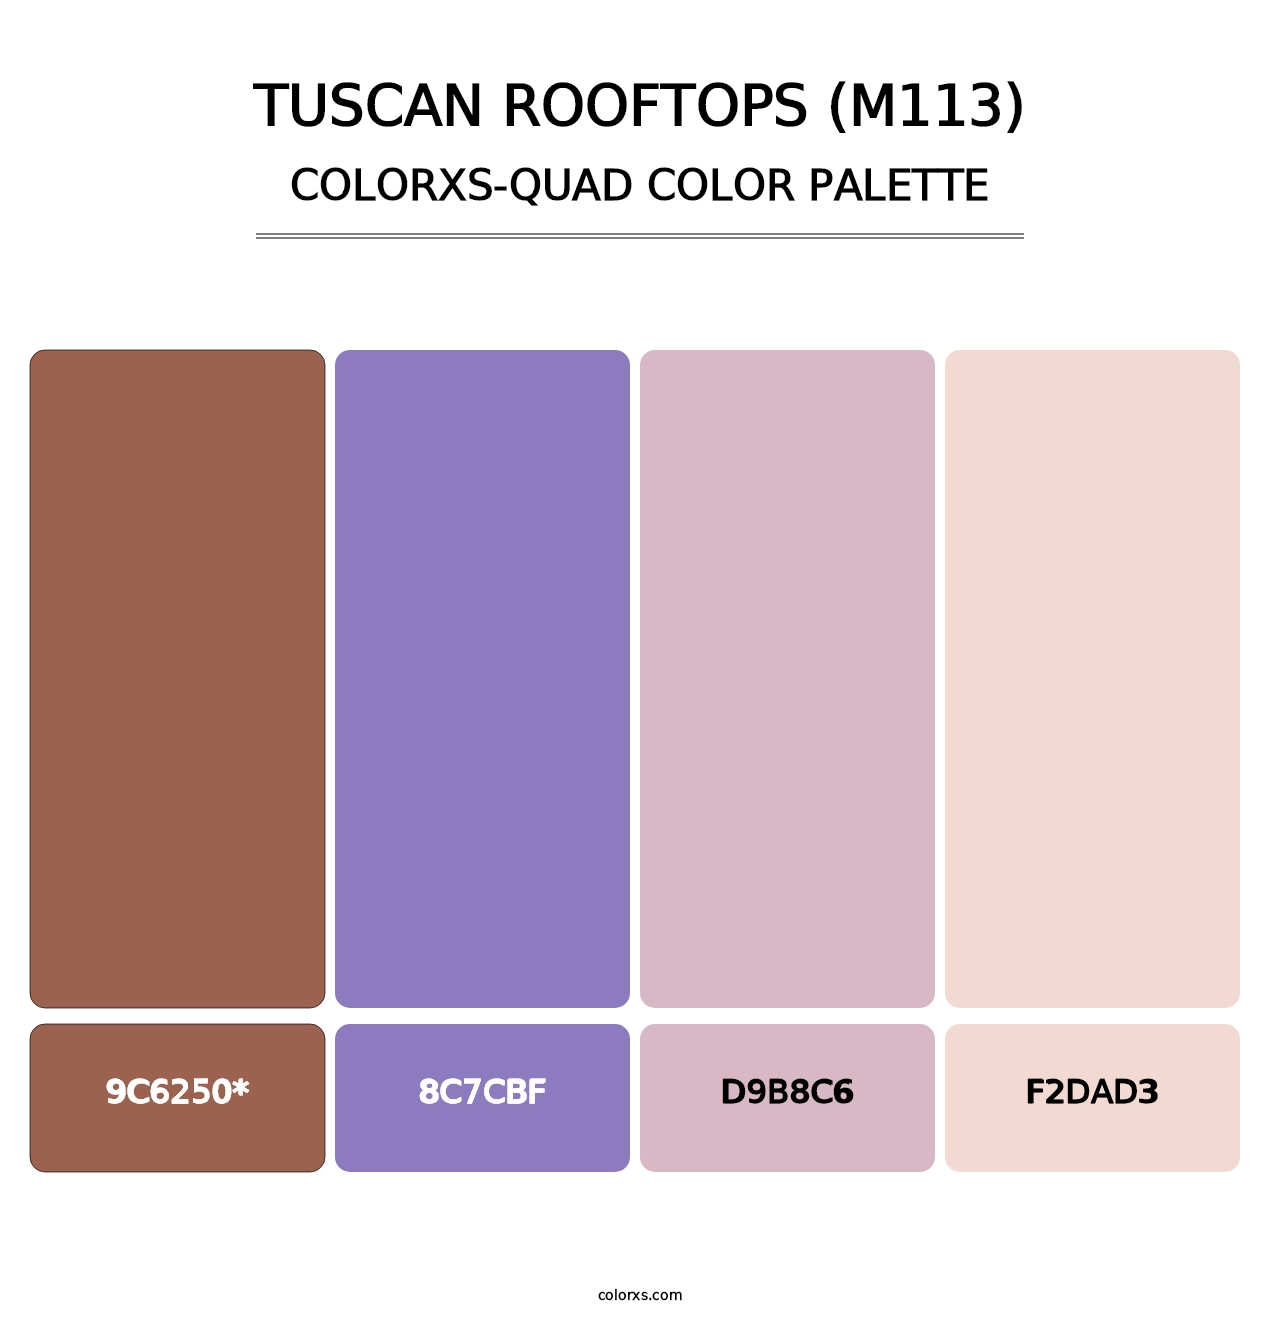 Tuscan Rooftops (M113) - Colorxs Quad Palette